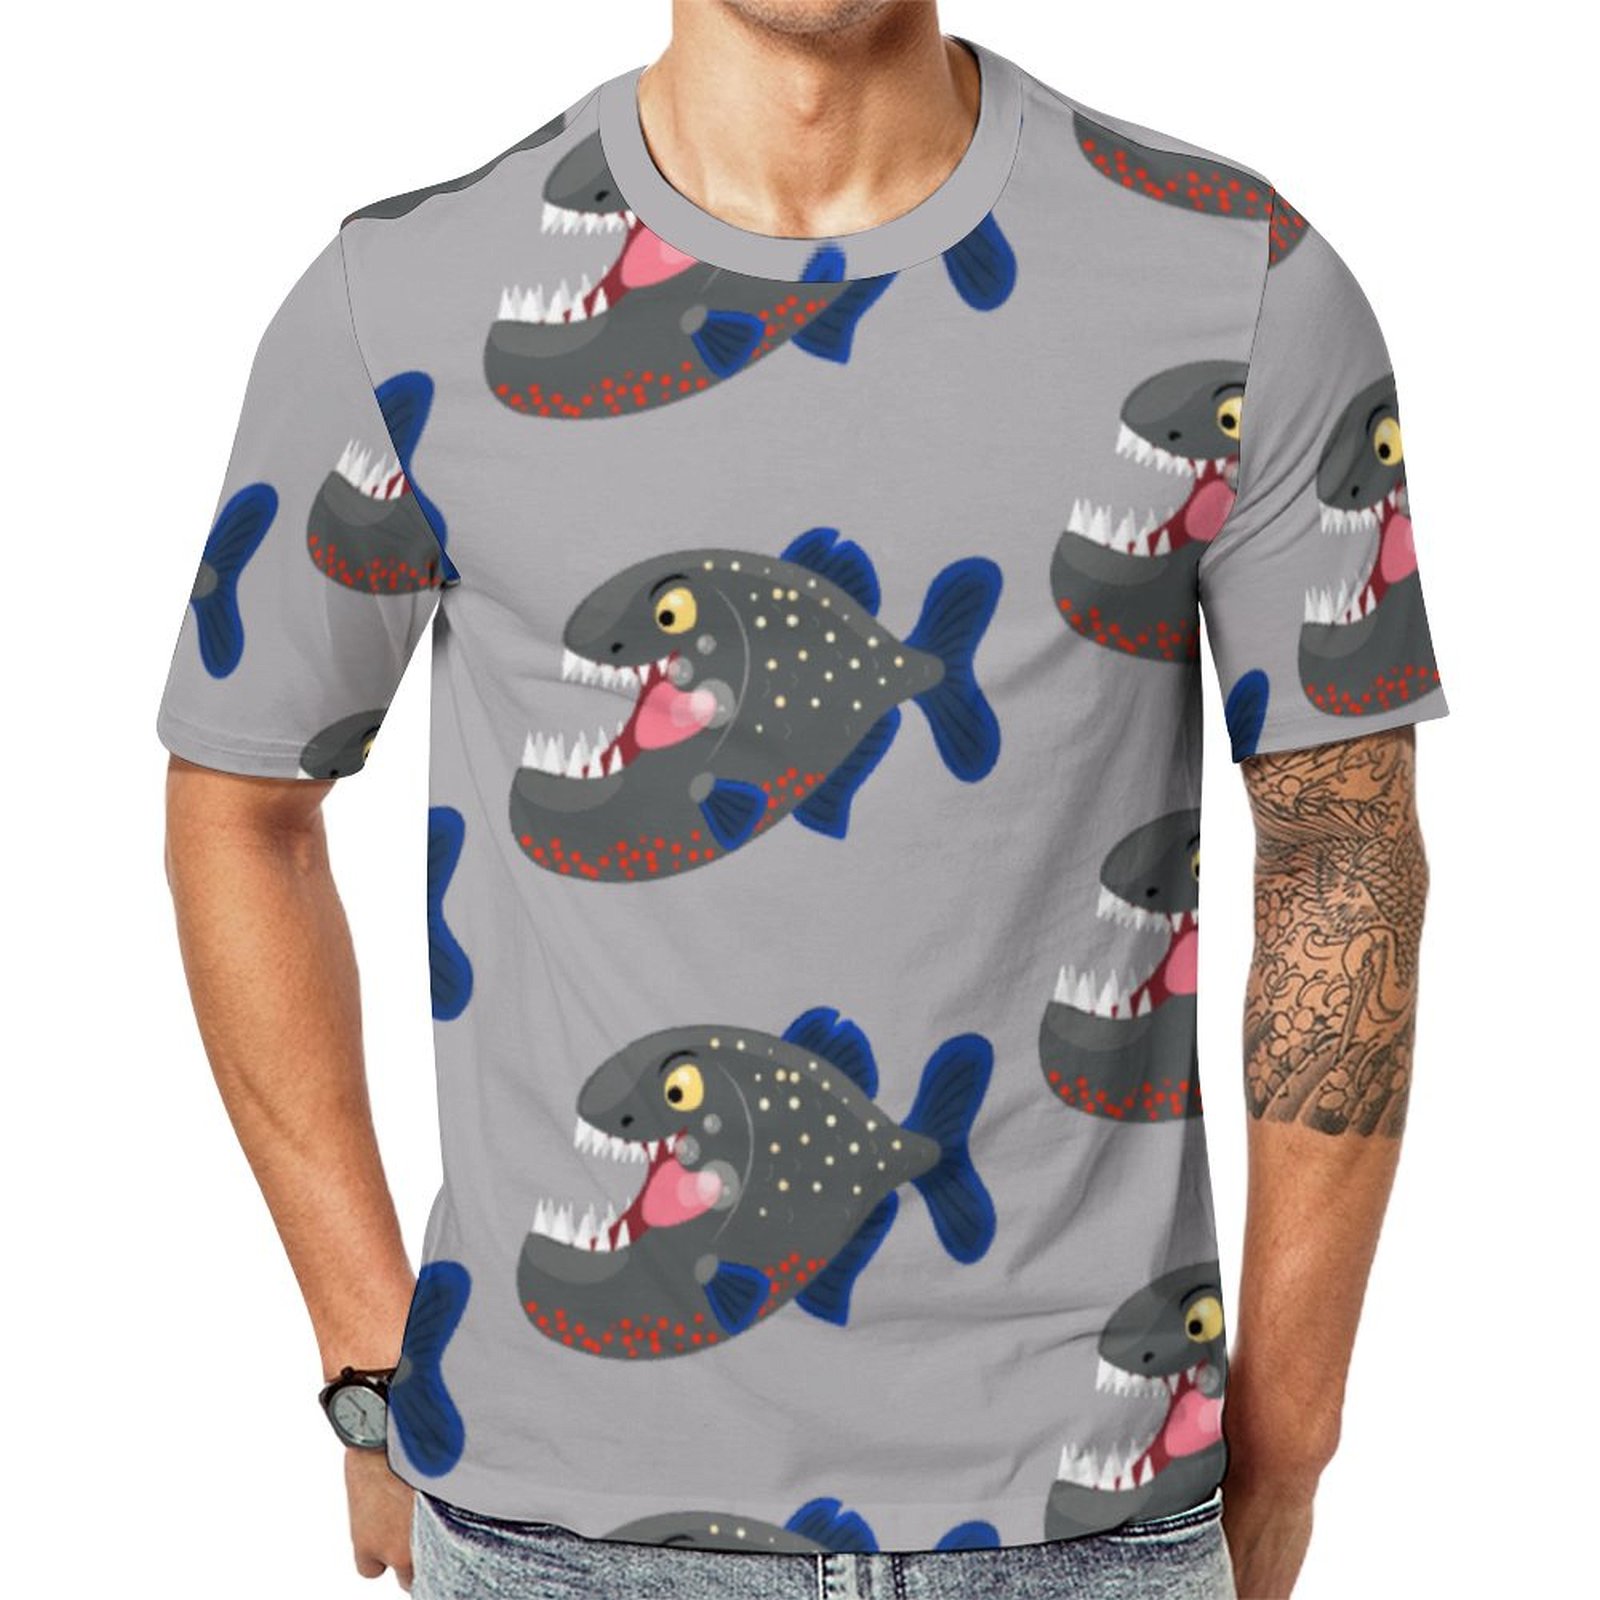 Hungry Funny Piranha Cartoon Illustration Short Sleeve Print Unisex Tshirt Summer Casual Tees for Men and Women Coolcoshirts